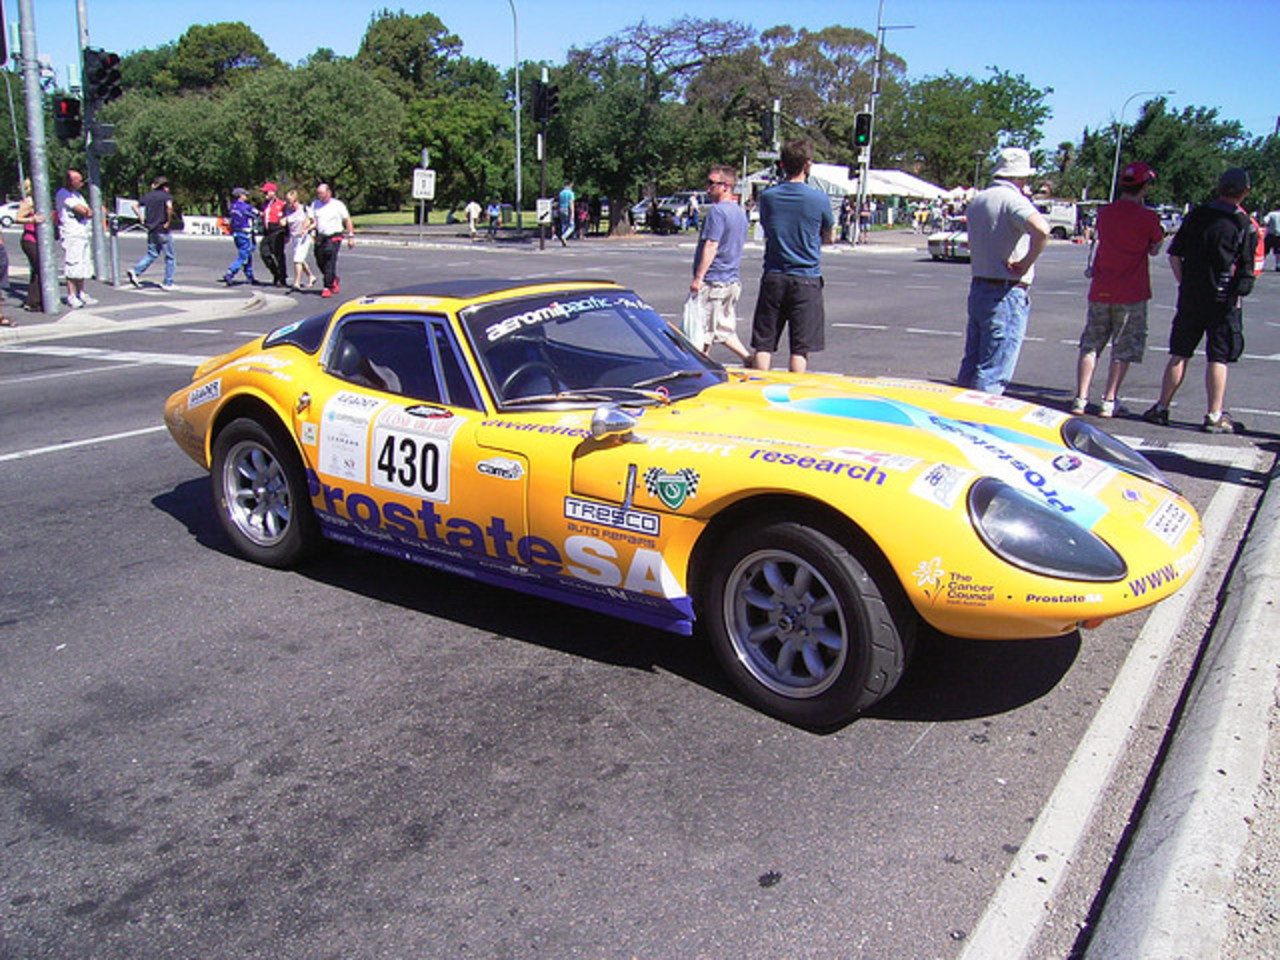 marcos sports car | Flickr - Photo Sharing!